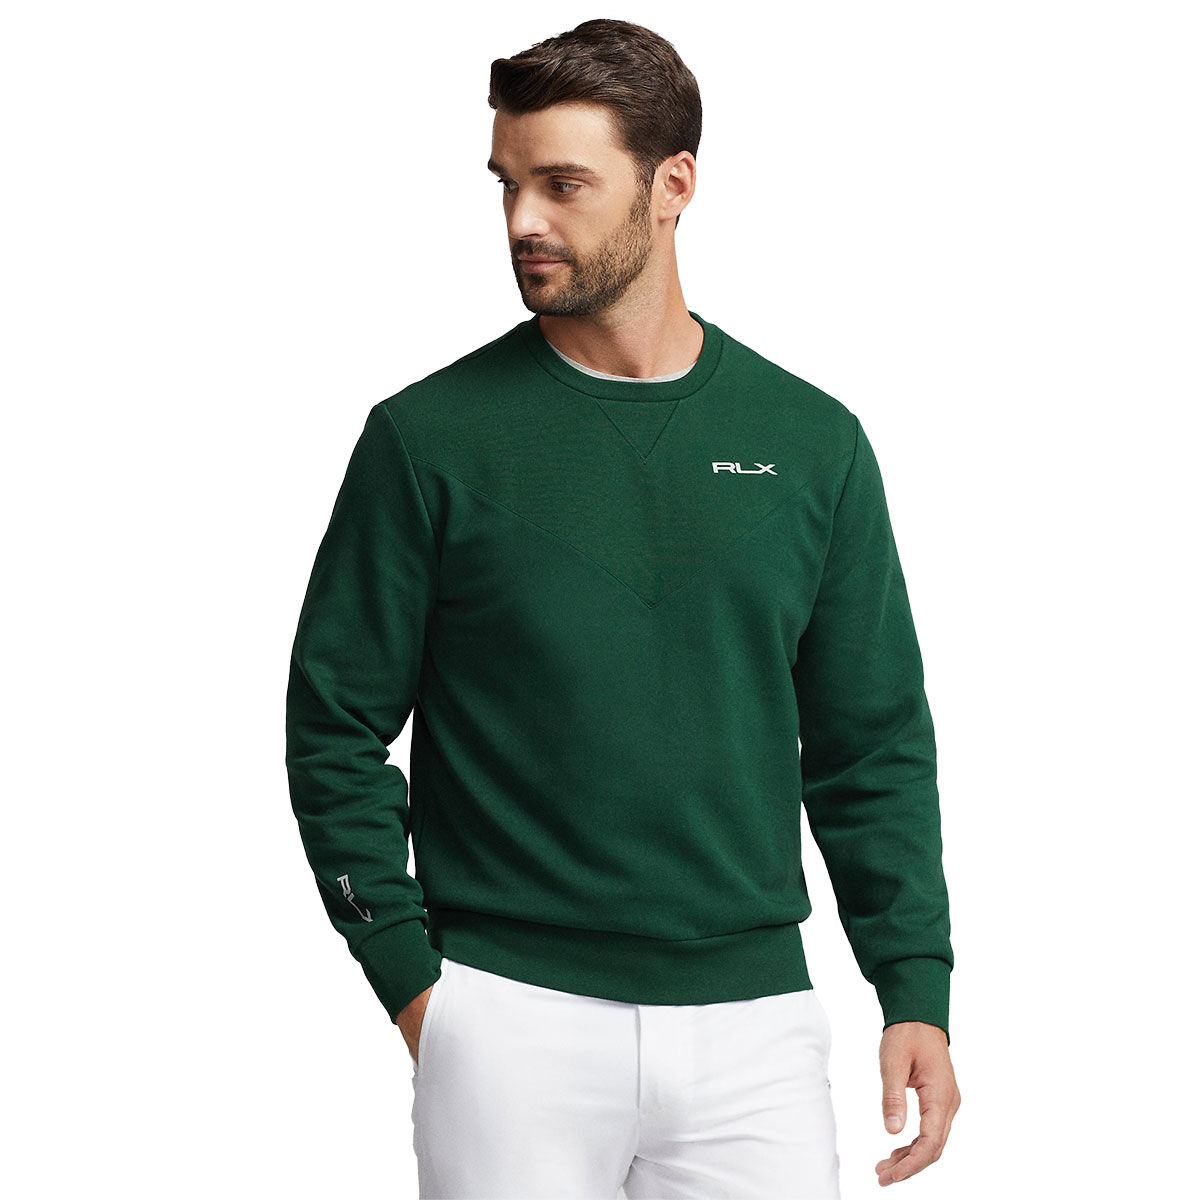 Ralph Lauren Logo Double-Knit Pullover Golf Sweater, Mens, Moss agate, Small | American Golf